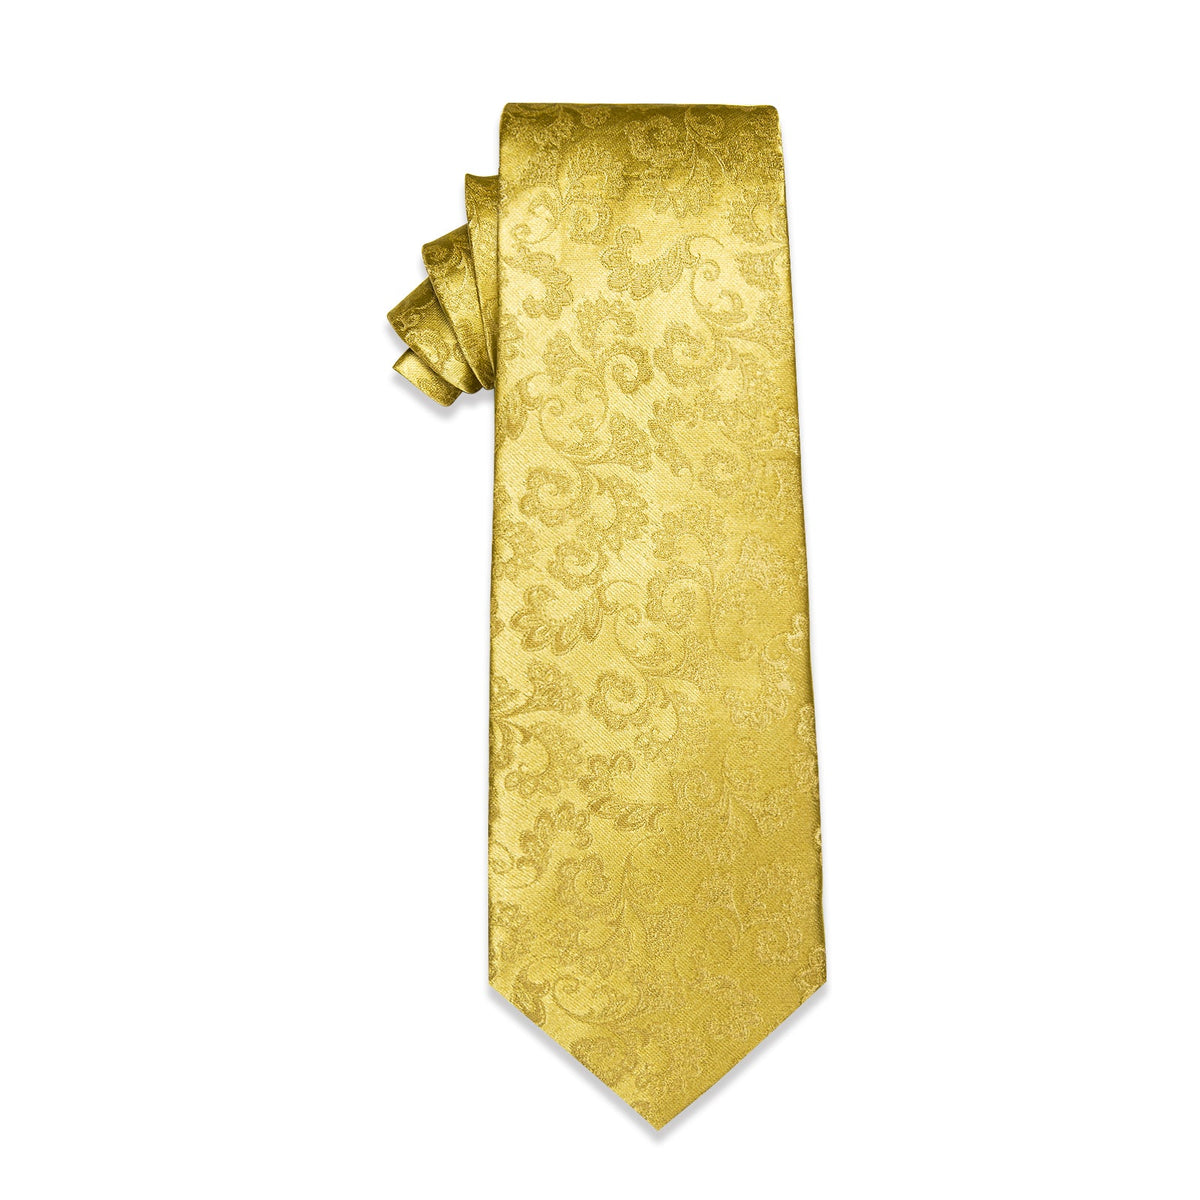 Floral yellow neck tie